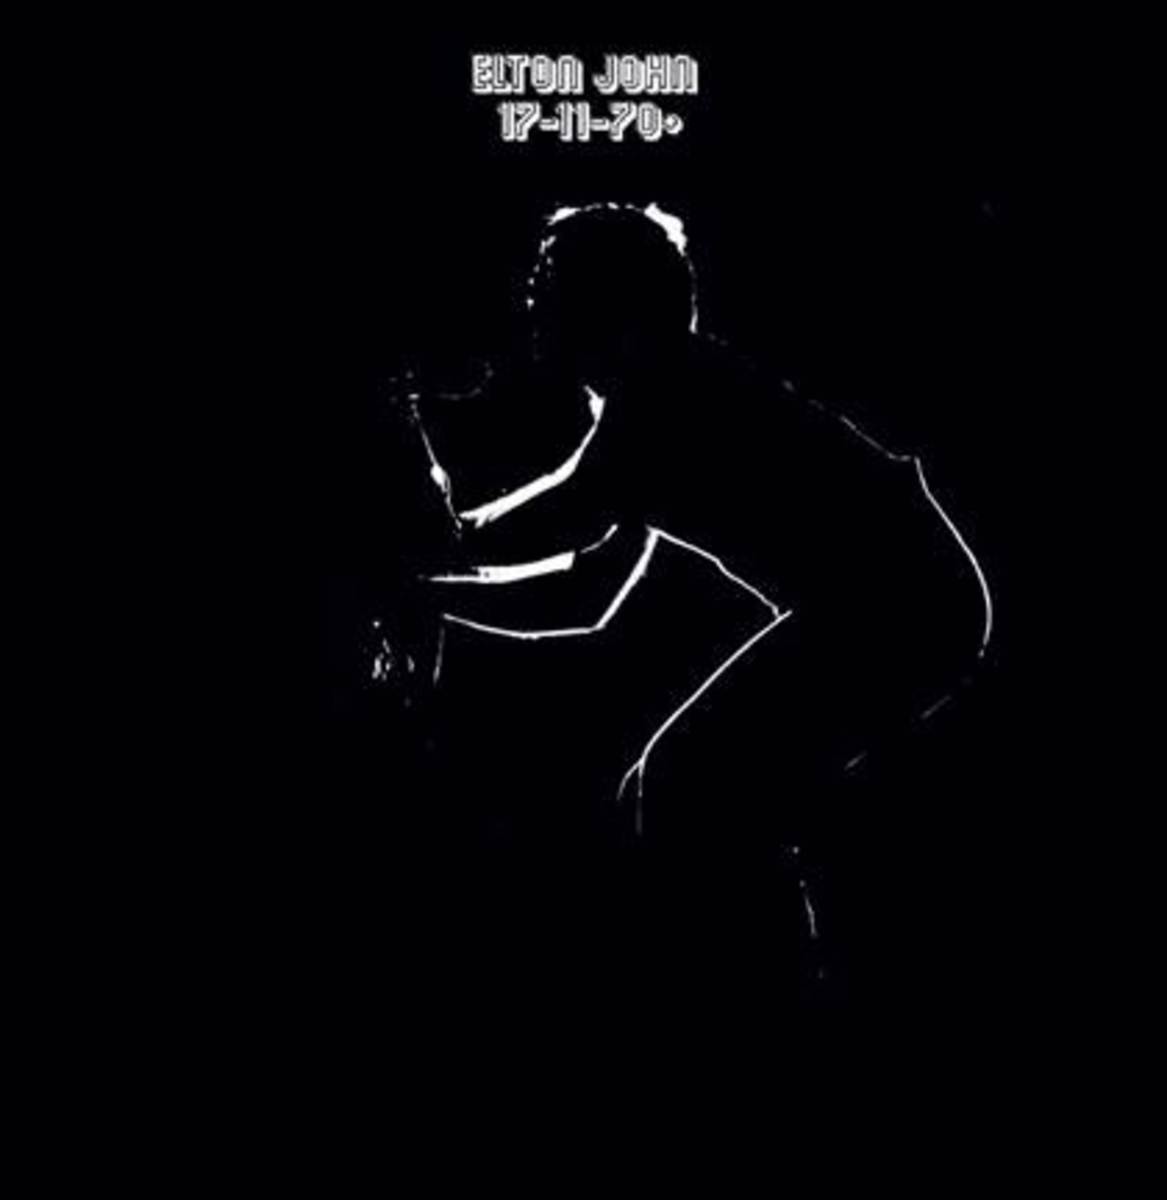 Elton-john-17-11-70